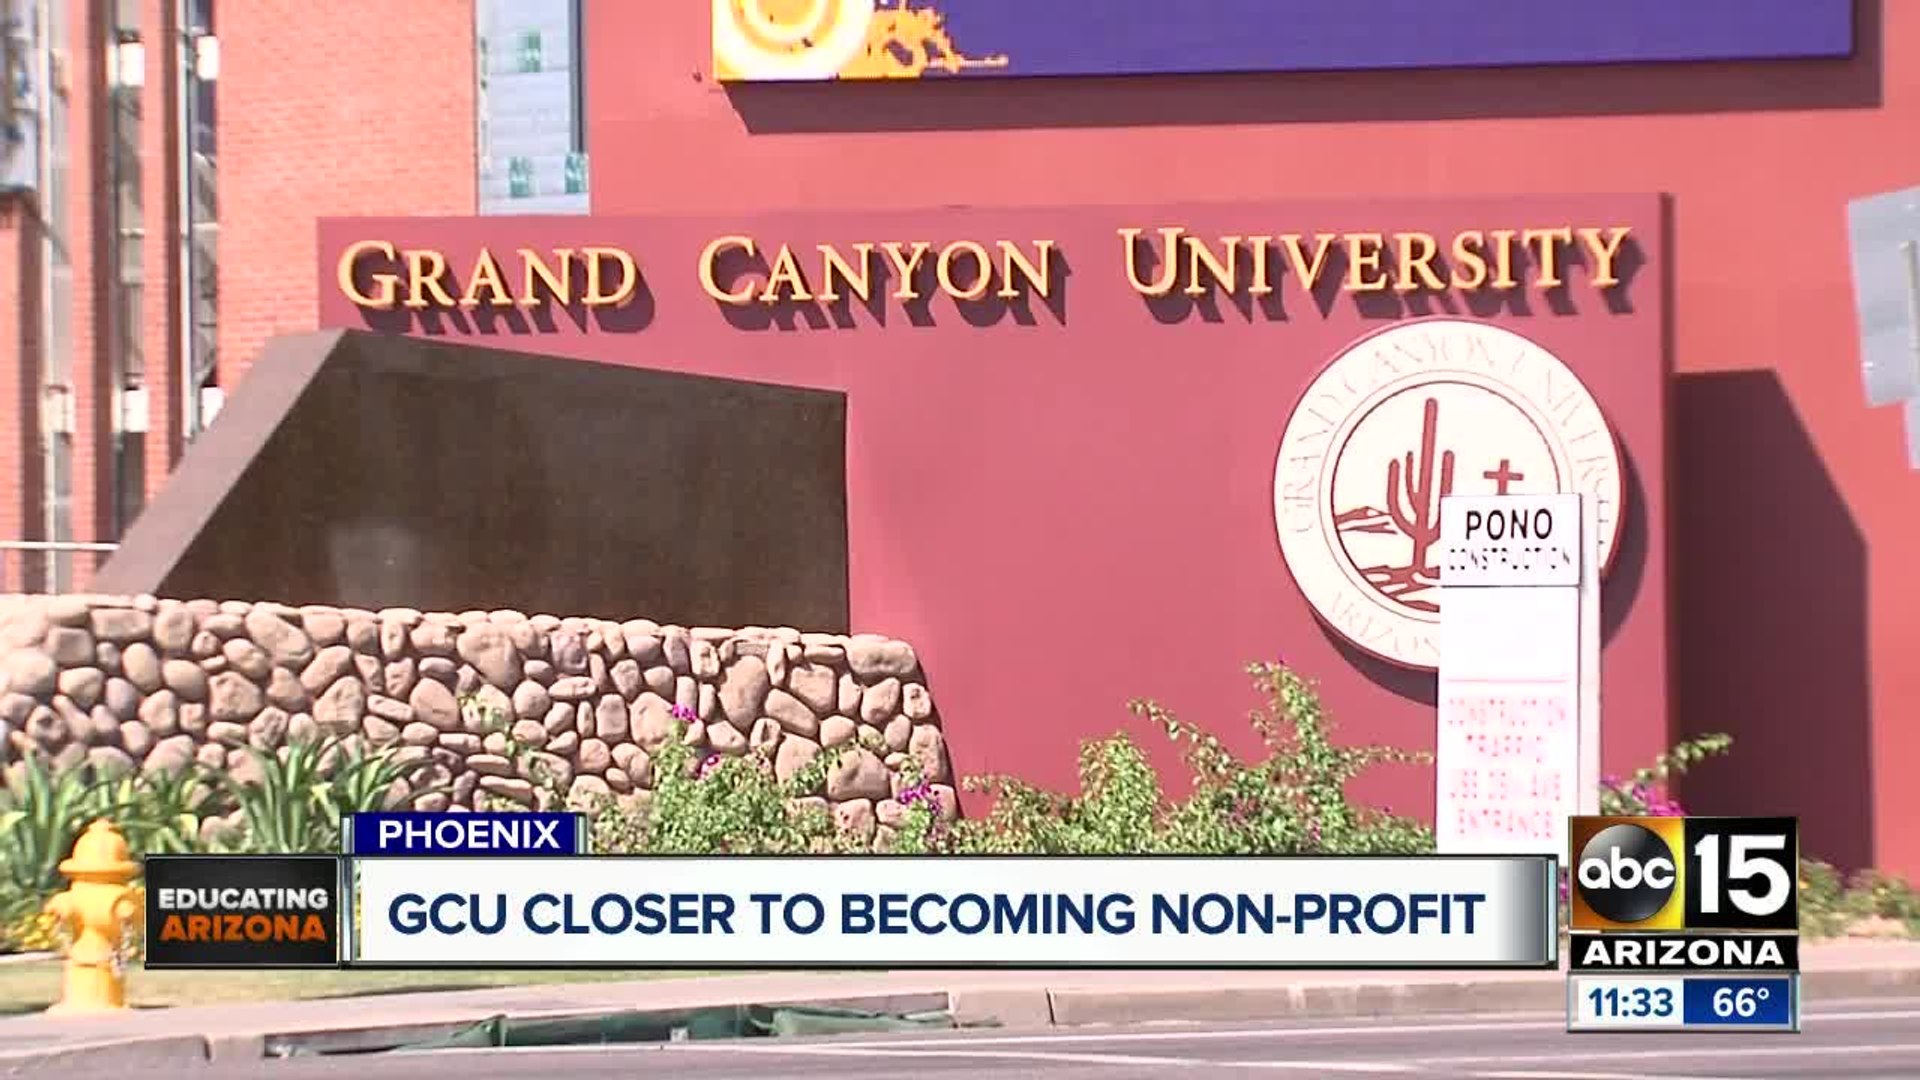 Grand Canyon University moves back toward non-profit status